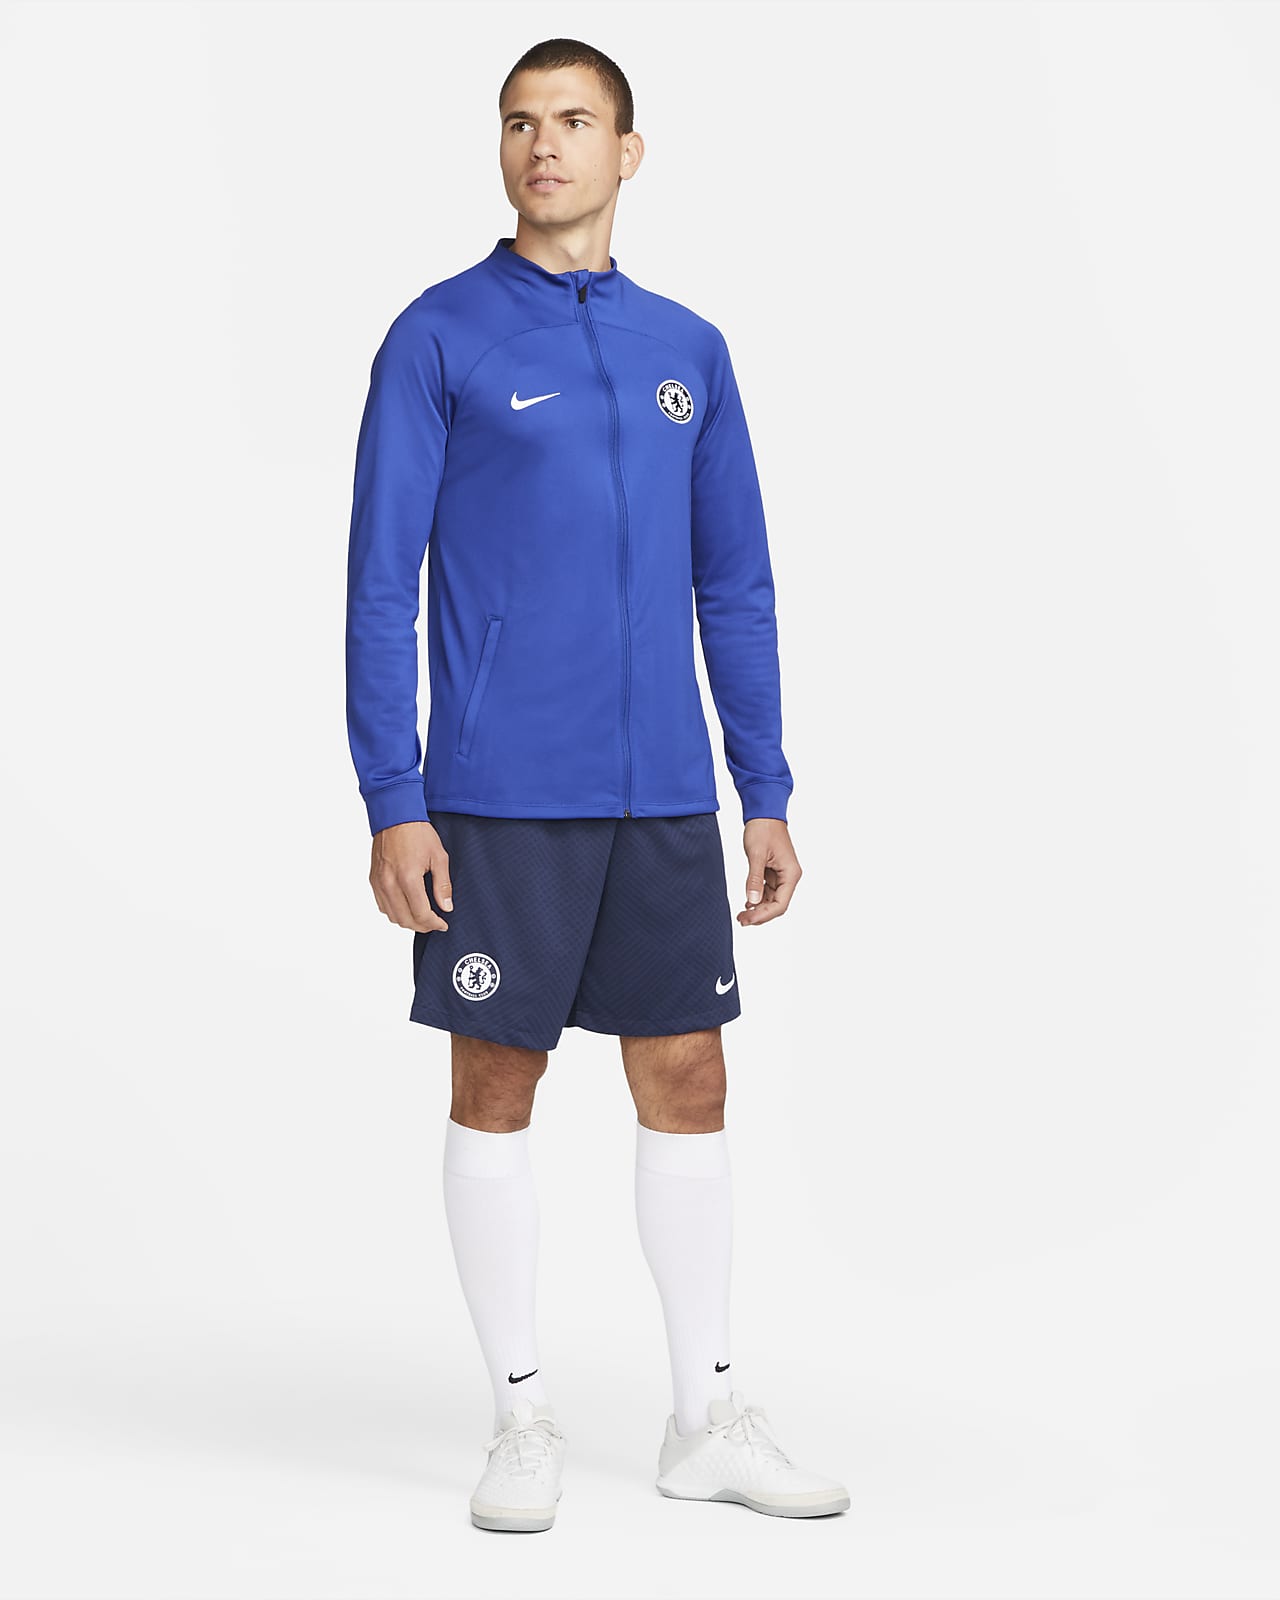 Chelsea FC Men's Nike Dri-FIT Track Jacket.